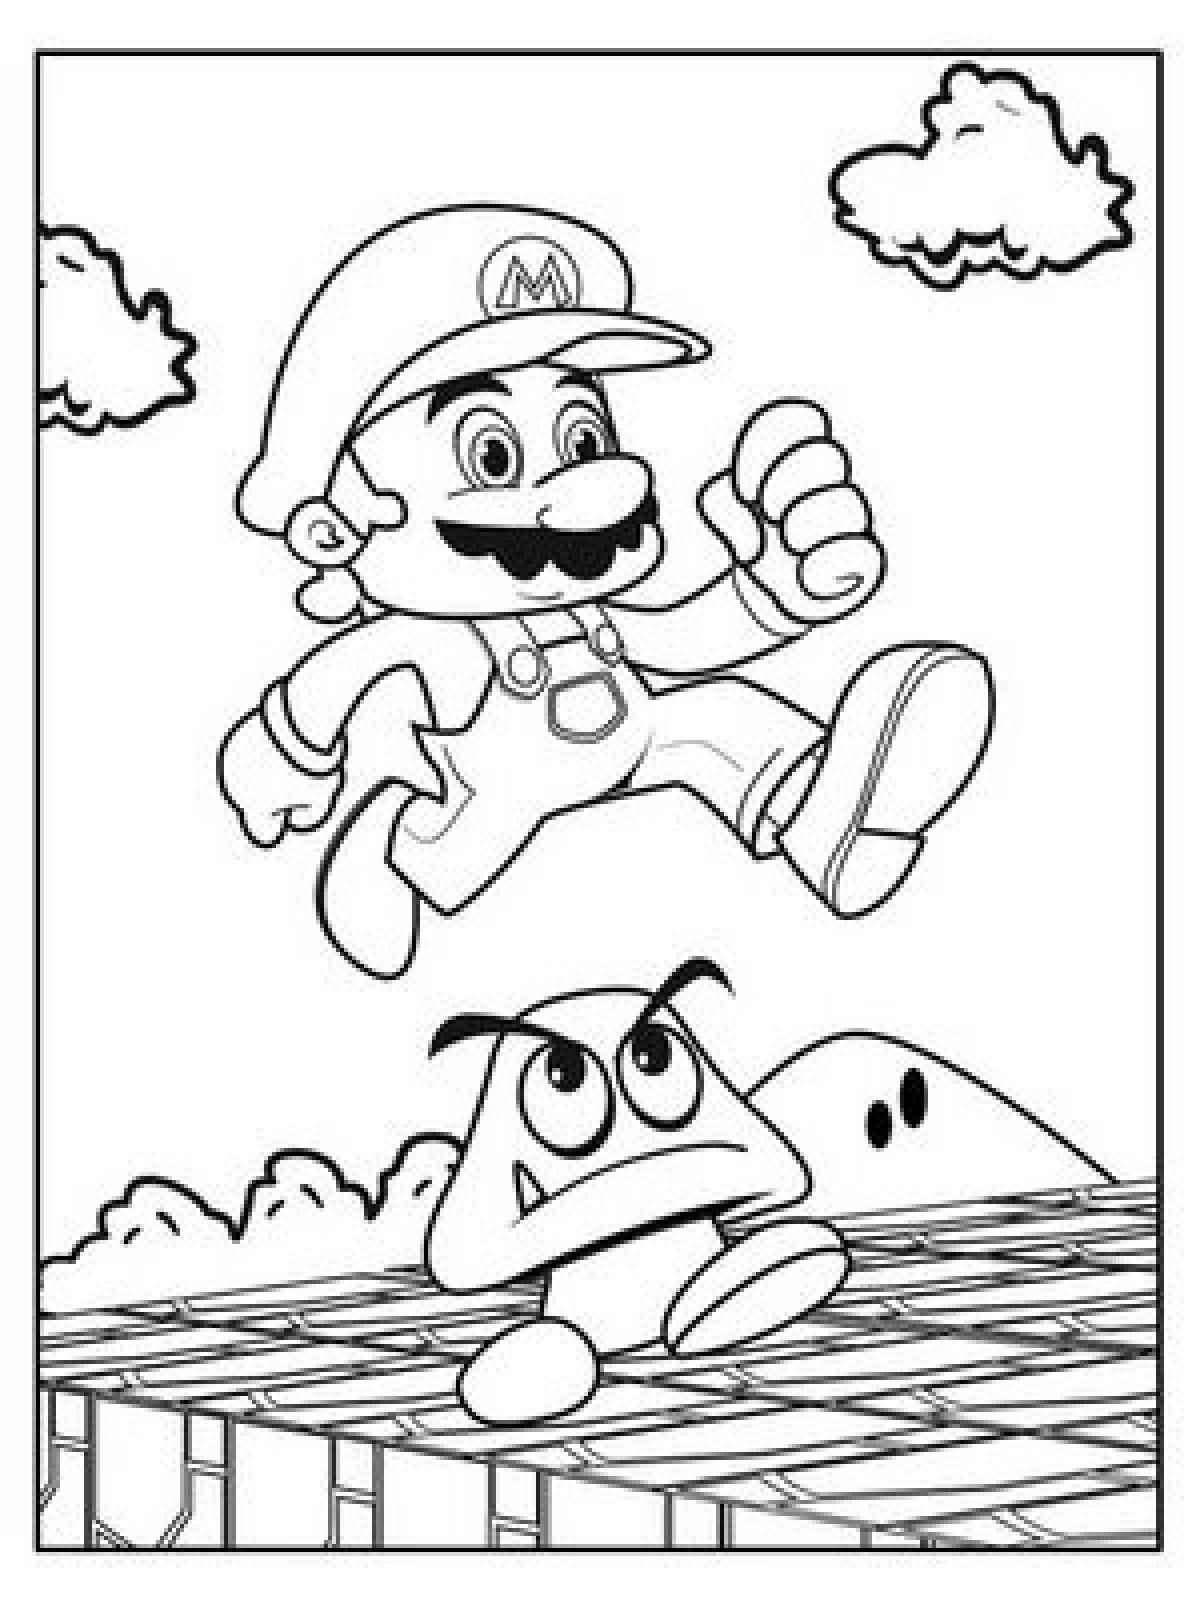 Mario and goomba